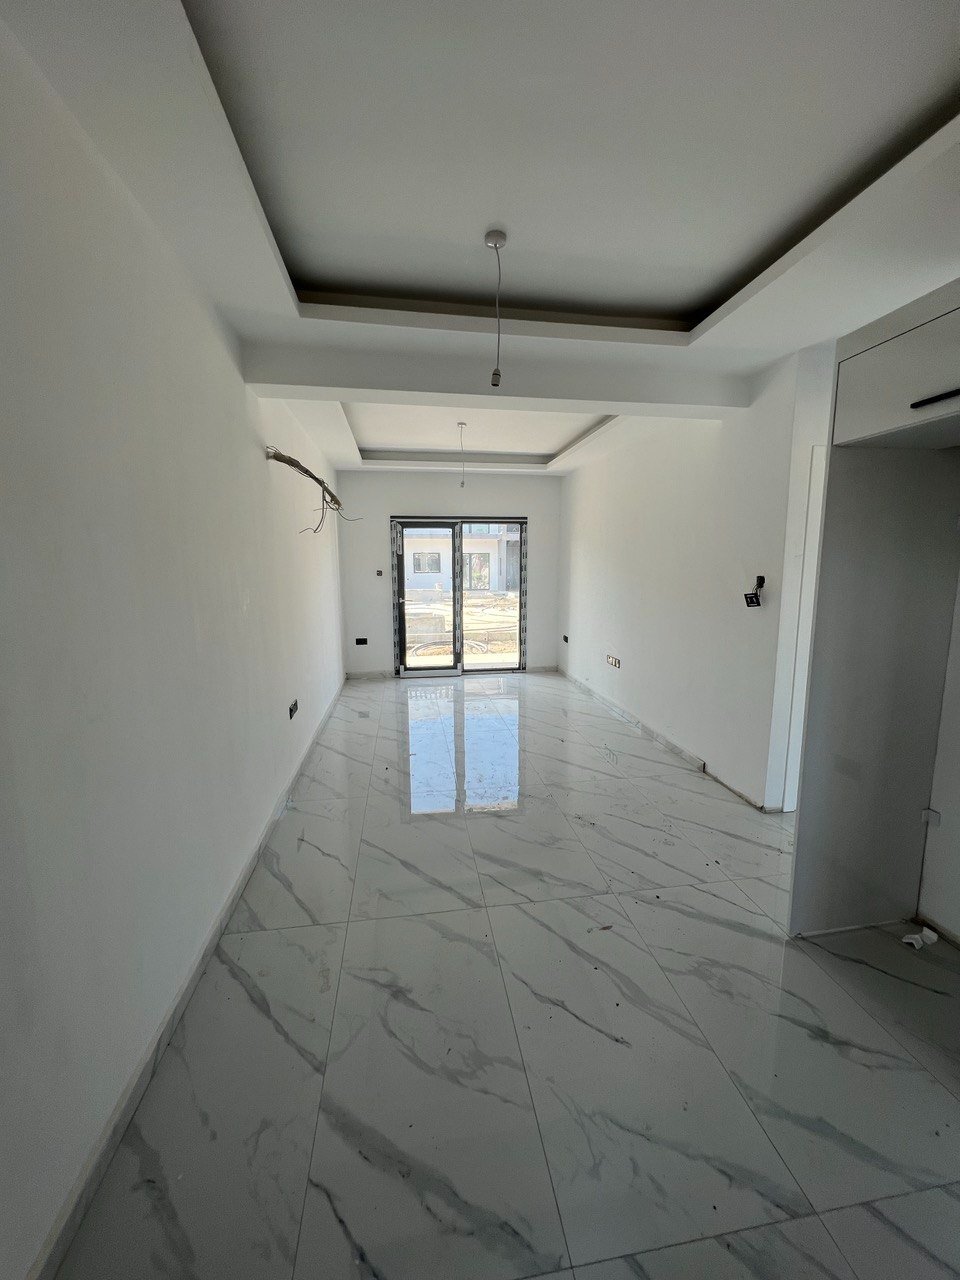 1 and 2 Bedroom Flats for sale in Kyrenia, Alsancak-78a9a3fd-045c-4bd2-82e5-9d1606c1af2f